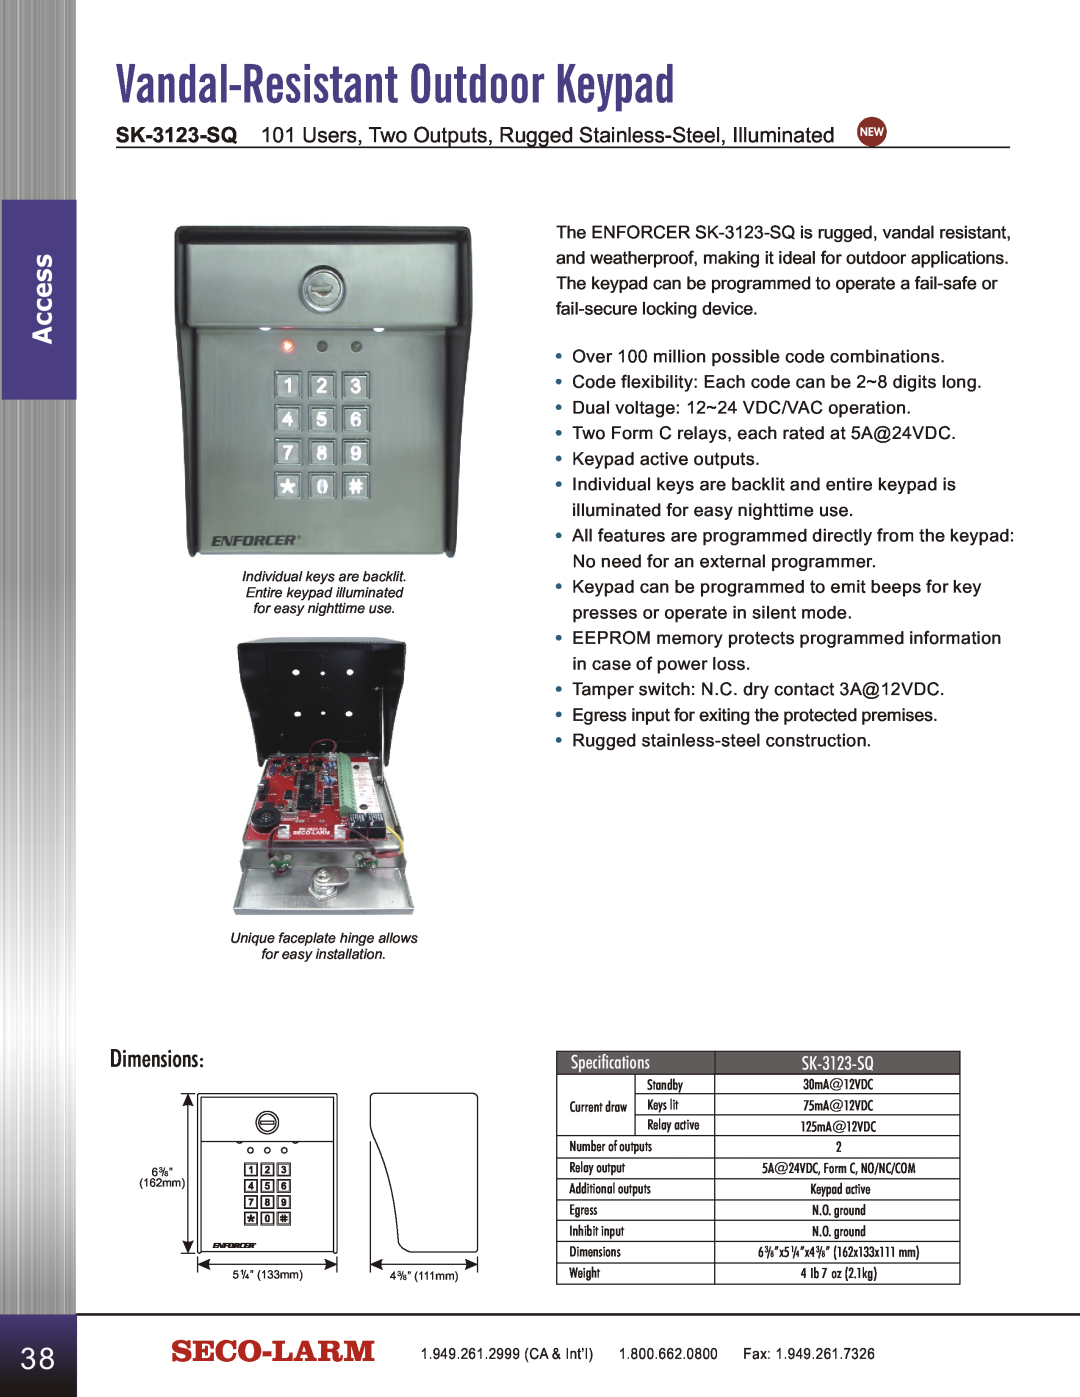 SECO-LARM USA SD-C141S manual Vandal-ResistantOutdoor Keypad, Dimensions, Access, Specifications, SK-3123-SQ 